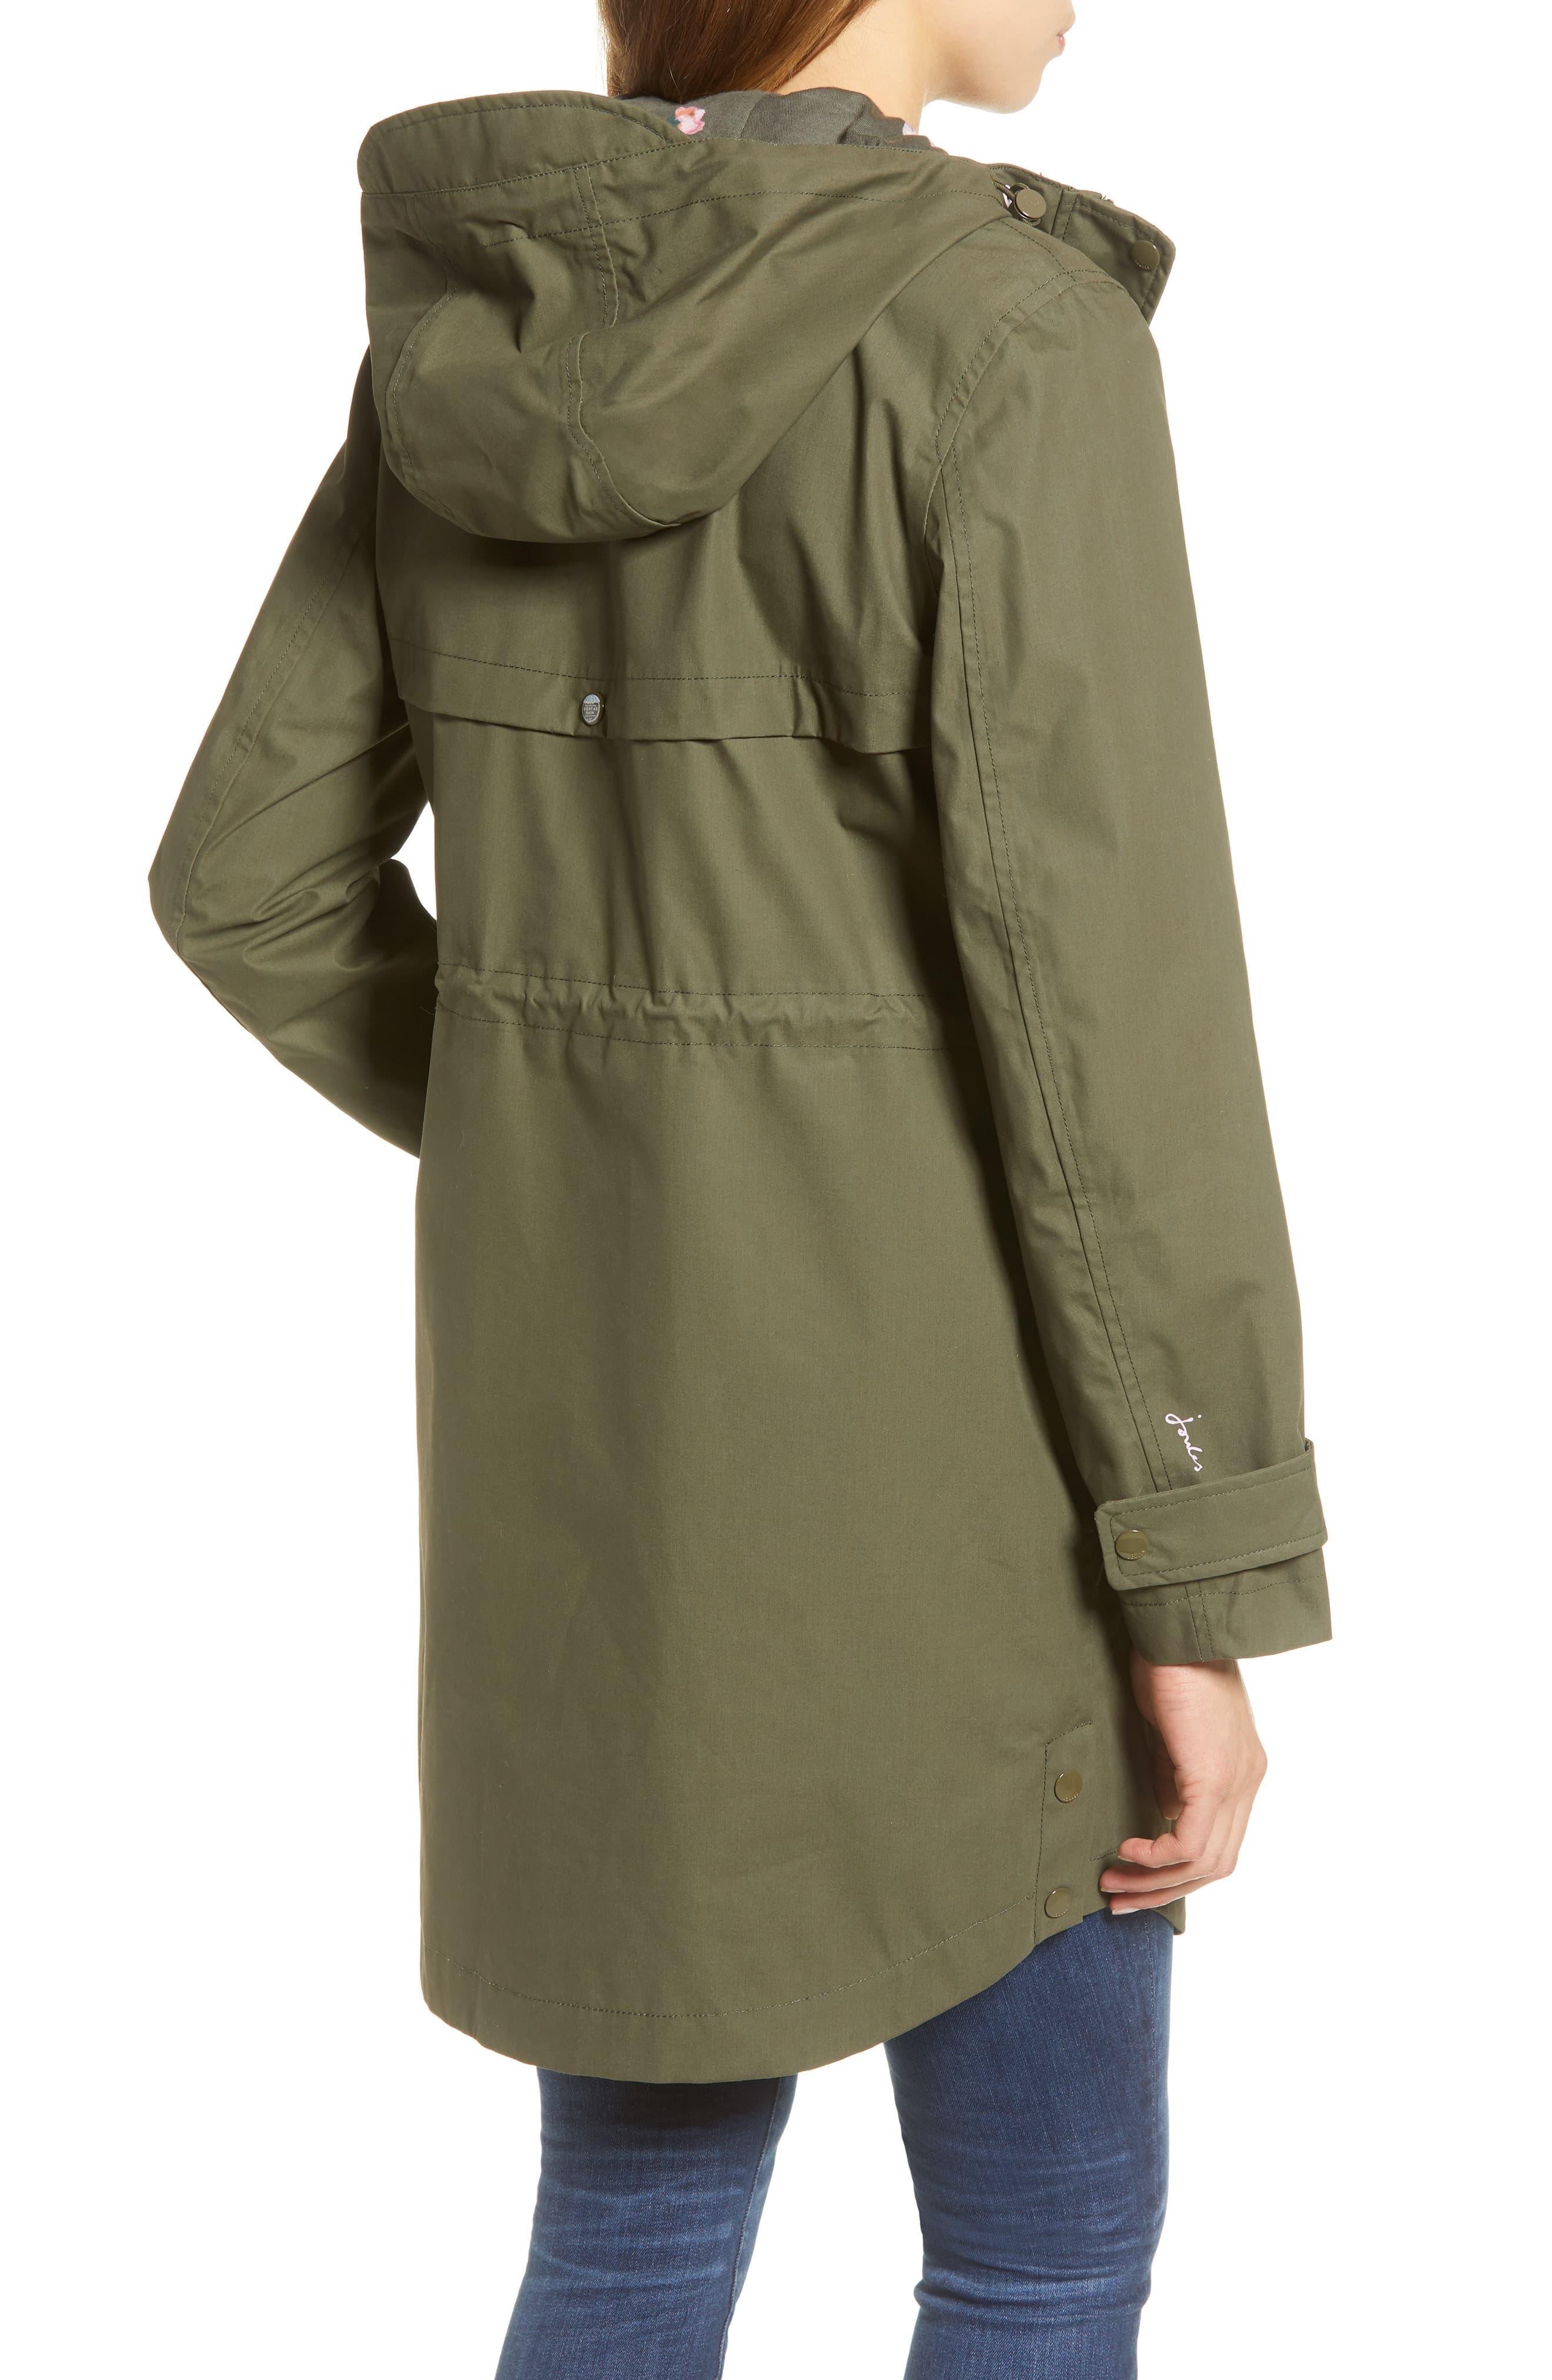 Joules Riverside Fleece Lined Rubber Spring Raincoat Jacket BHFO 2602 